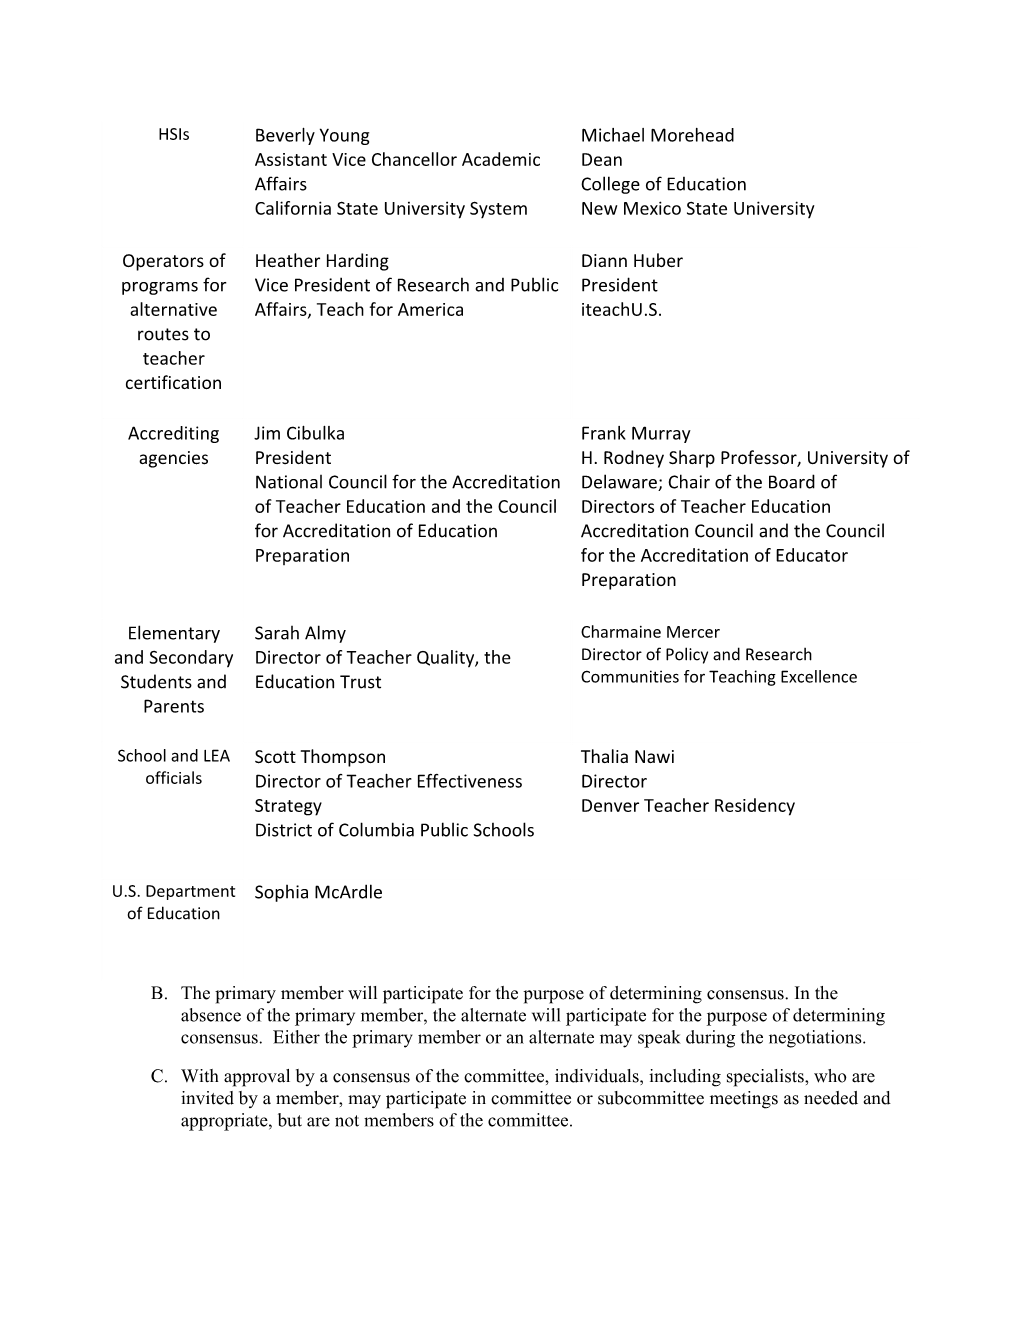 Negotiated Rulemaking 2011: Organizational Protocols for Session I, Team I, Teacher Preparation